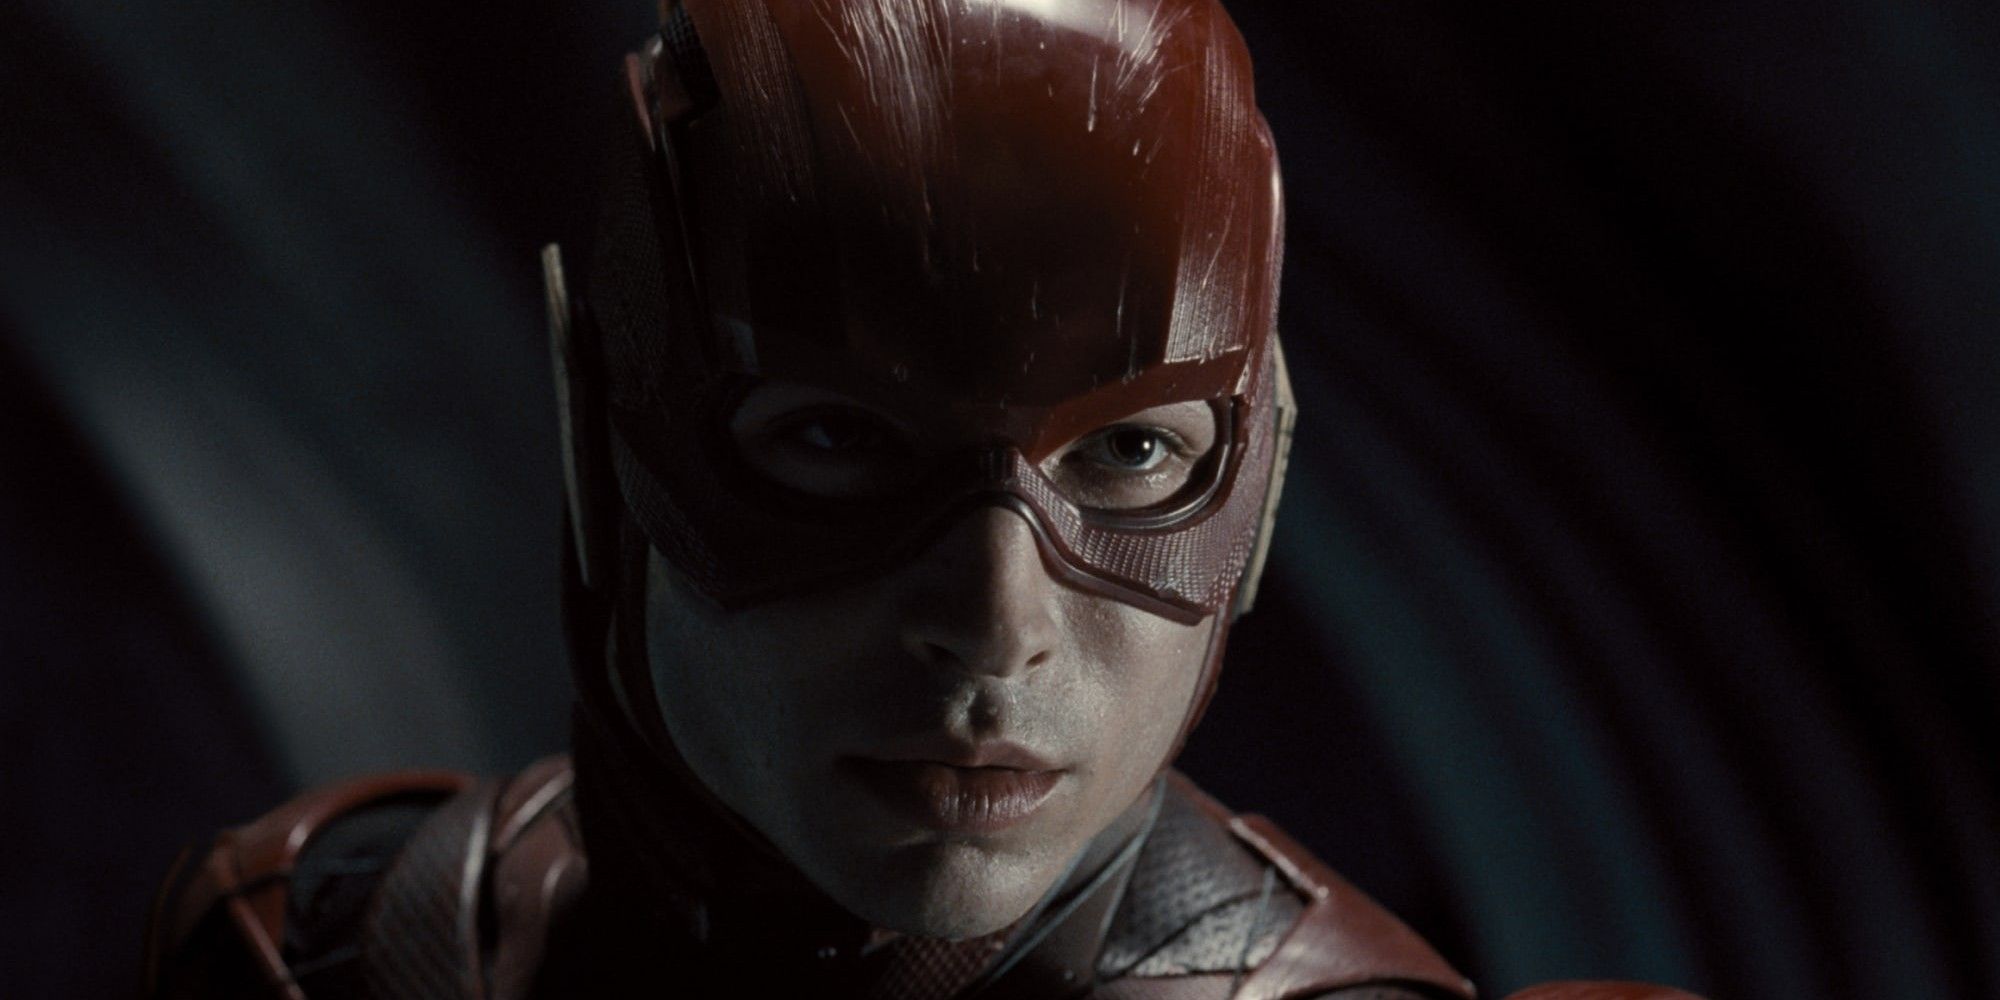 Ezra Miller as The Flash